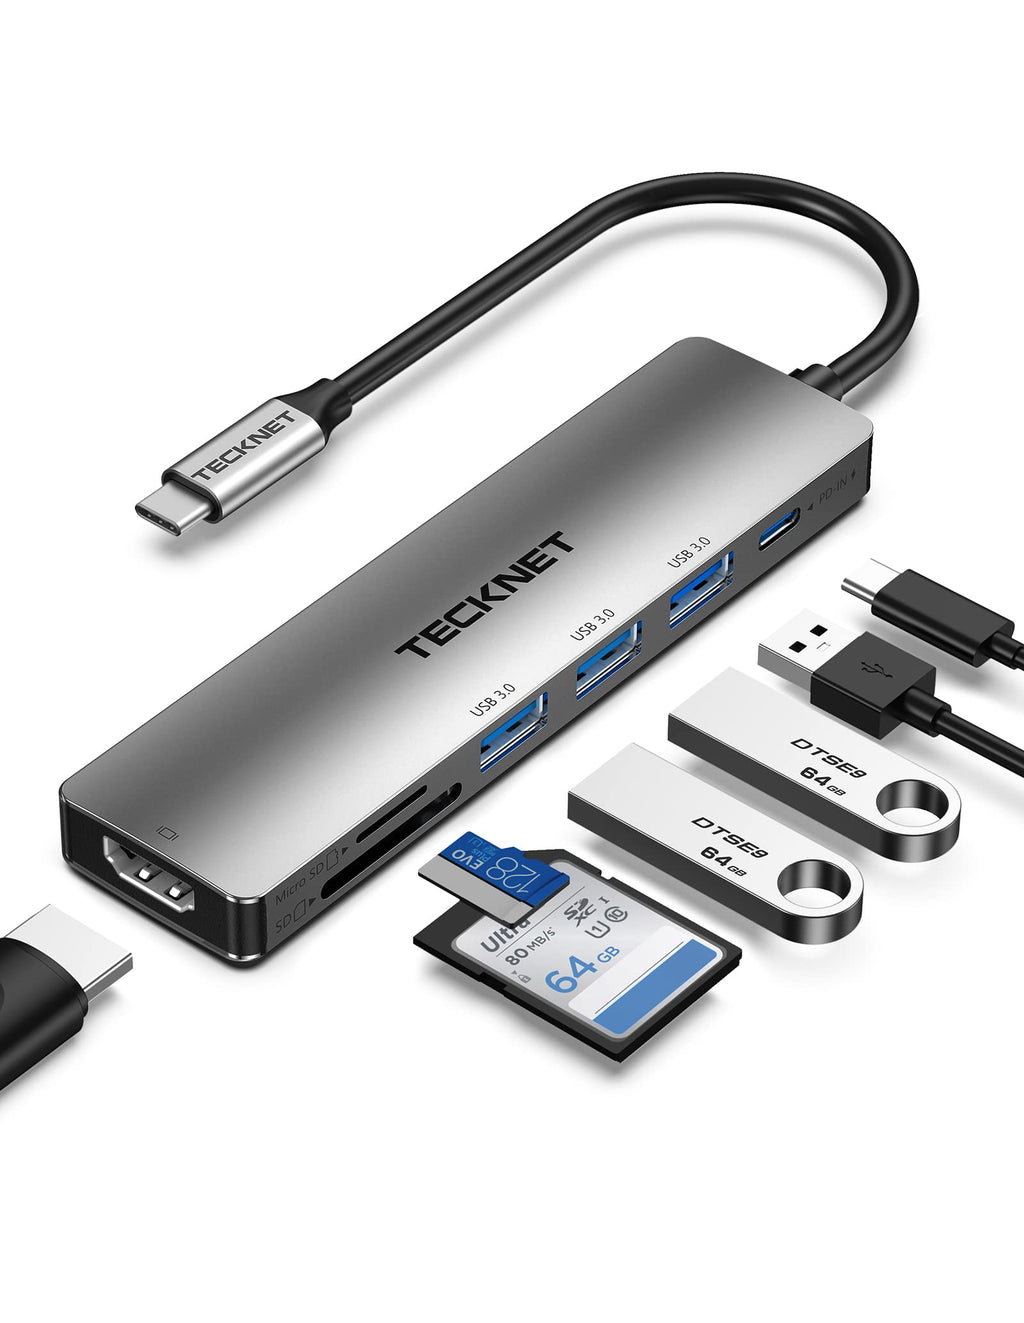  [AUSTRALIA] - TECKNET USB C Hub, 7 in 1 USB C Multiport Adapter with 4K HDMI, 100W PD, 3 USB 3.0 5 Gbps Data Ports, SD/TF Card Reader, USB C to HDMI Dongle USB-C Hub for iPad MacBook Pro/Air Thinkpad Surface XPS Grey